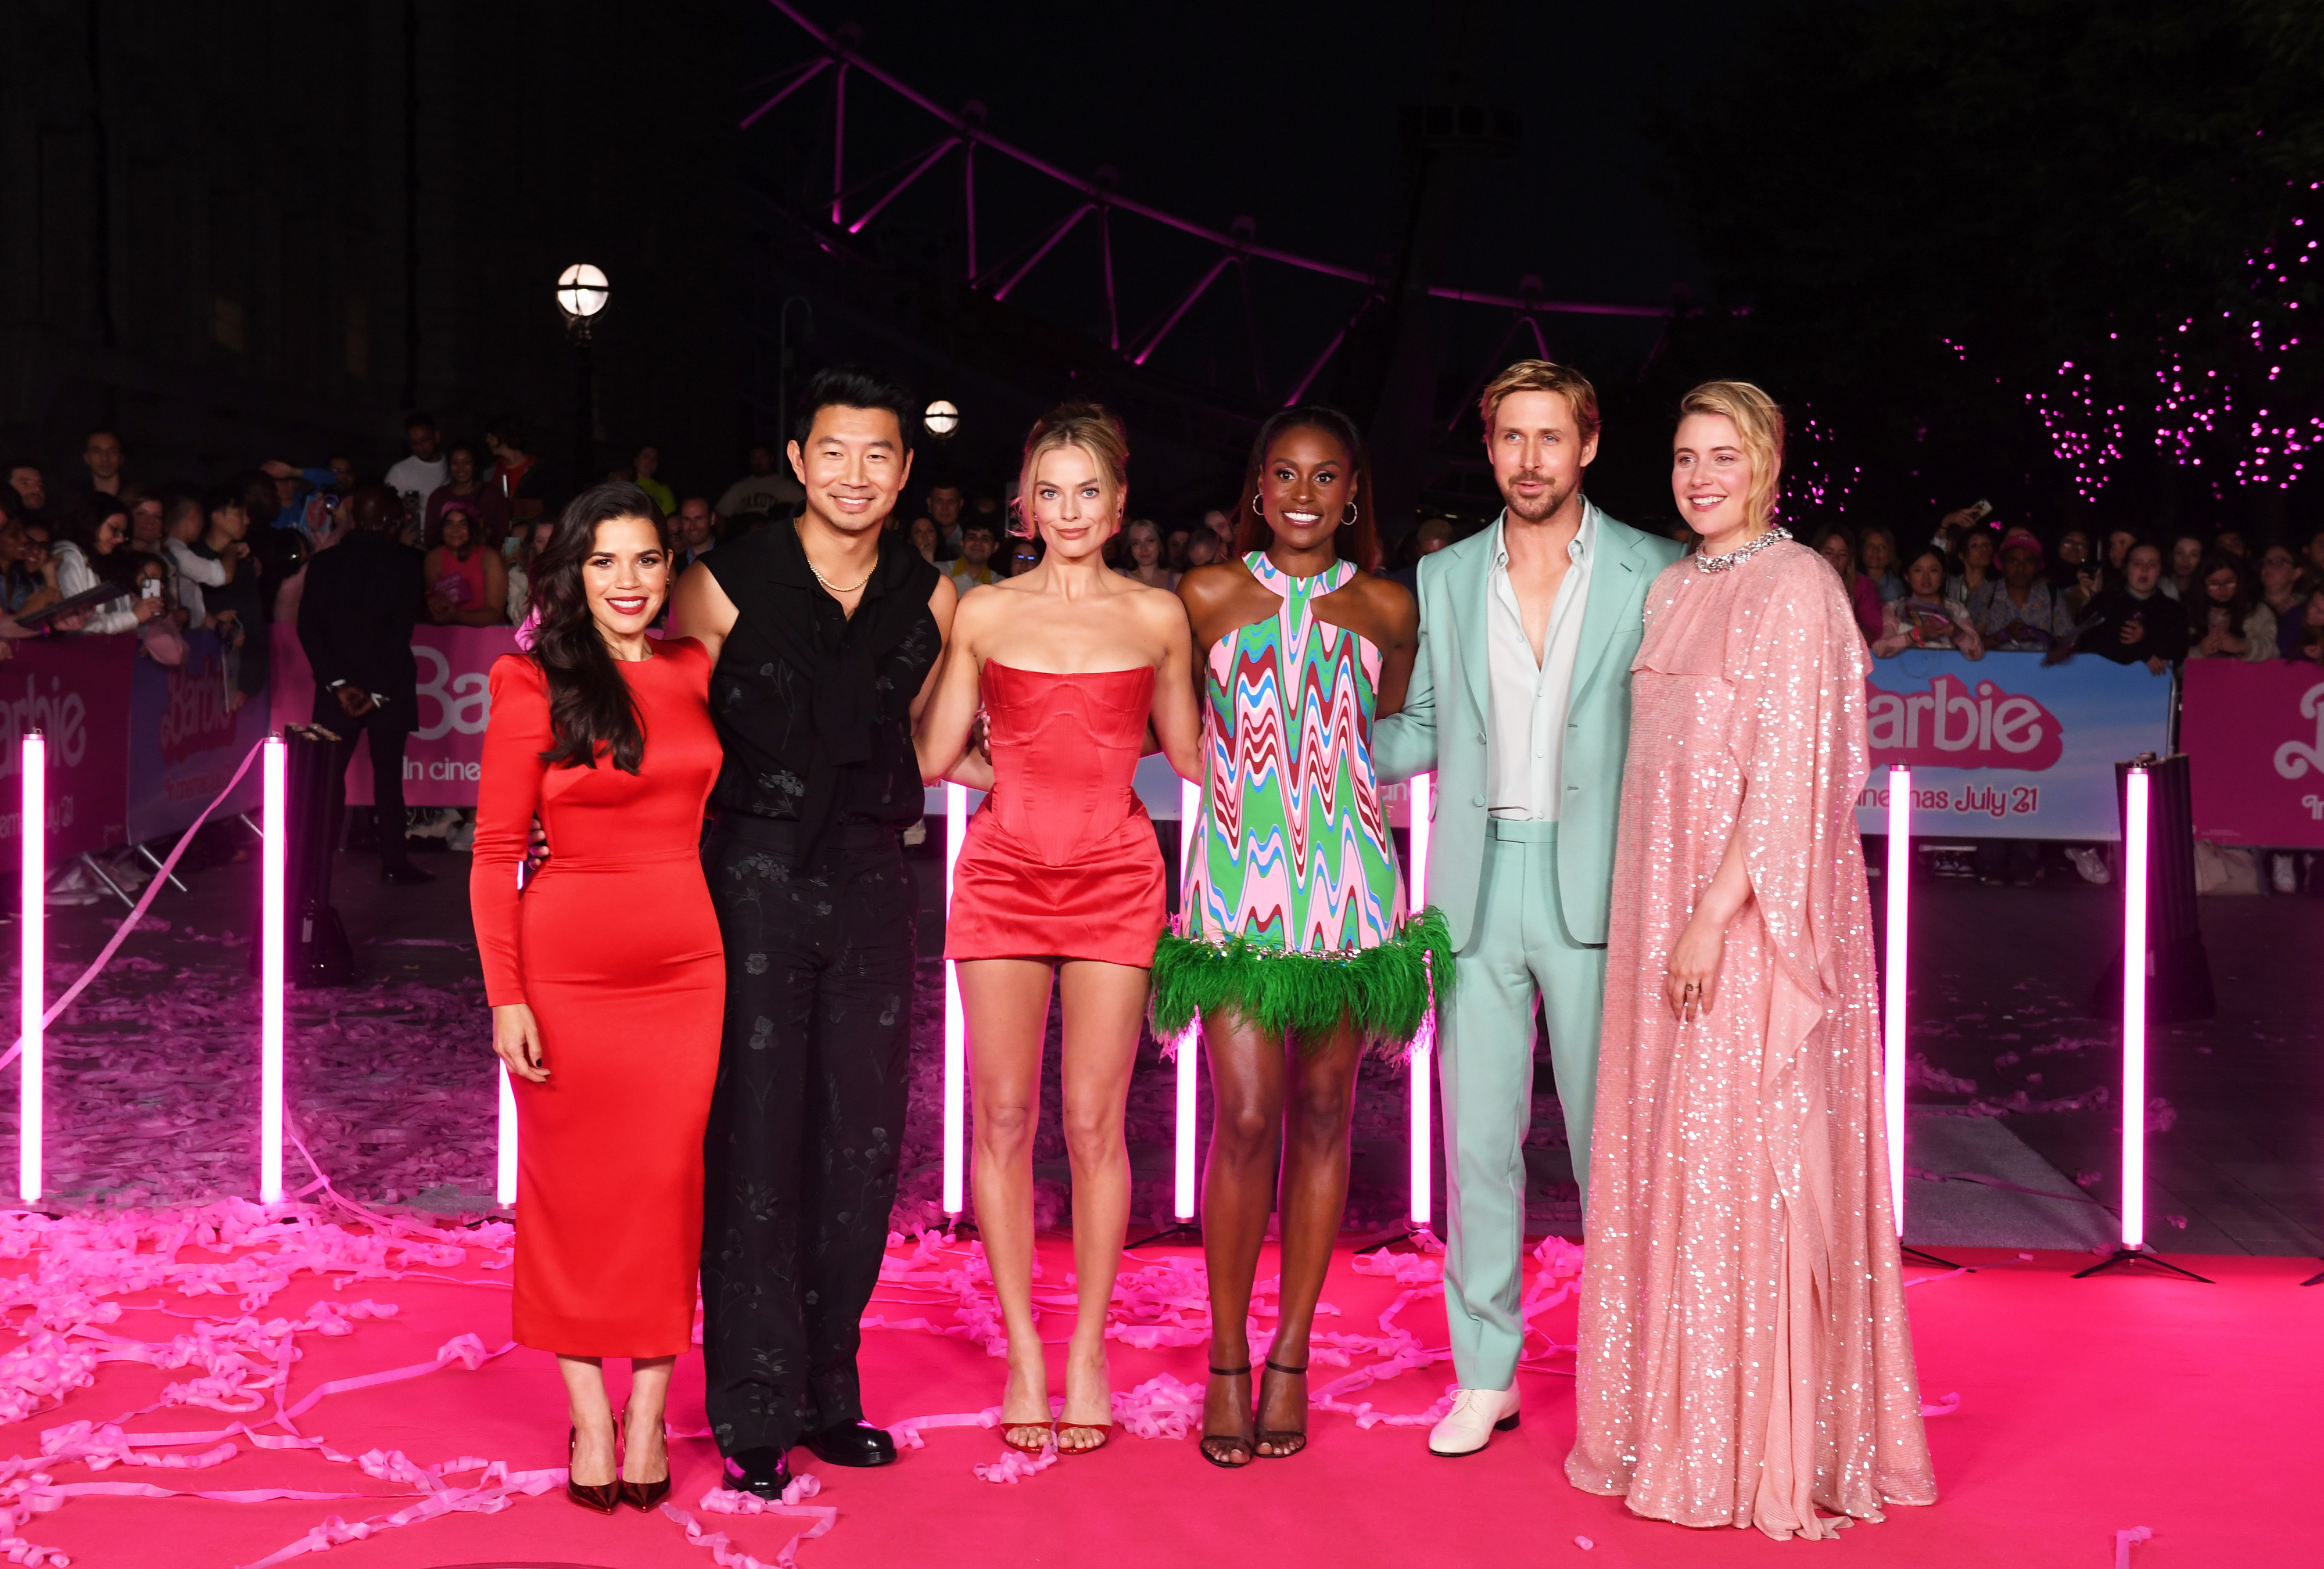 America Ferrera, Simu Liu, Margot Robbie, Issa Rae, Ryan Gosling, and Greta Gerwig on the pink carpet